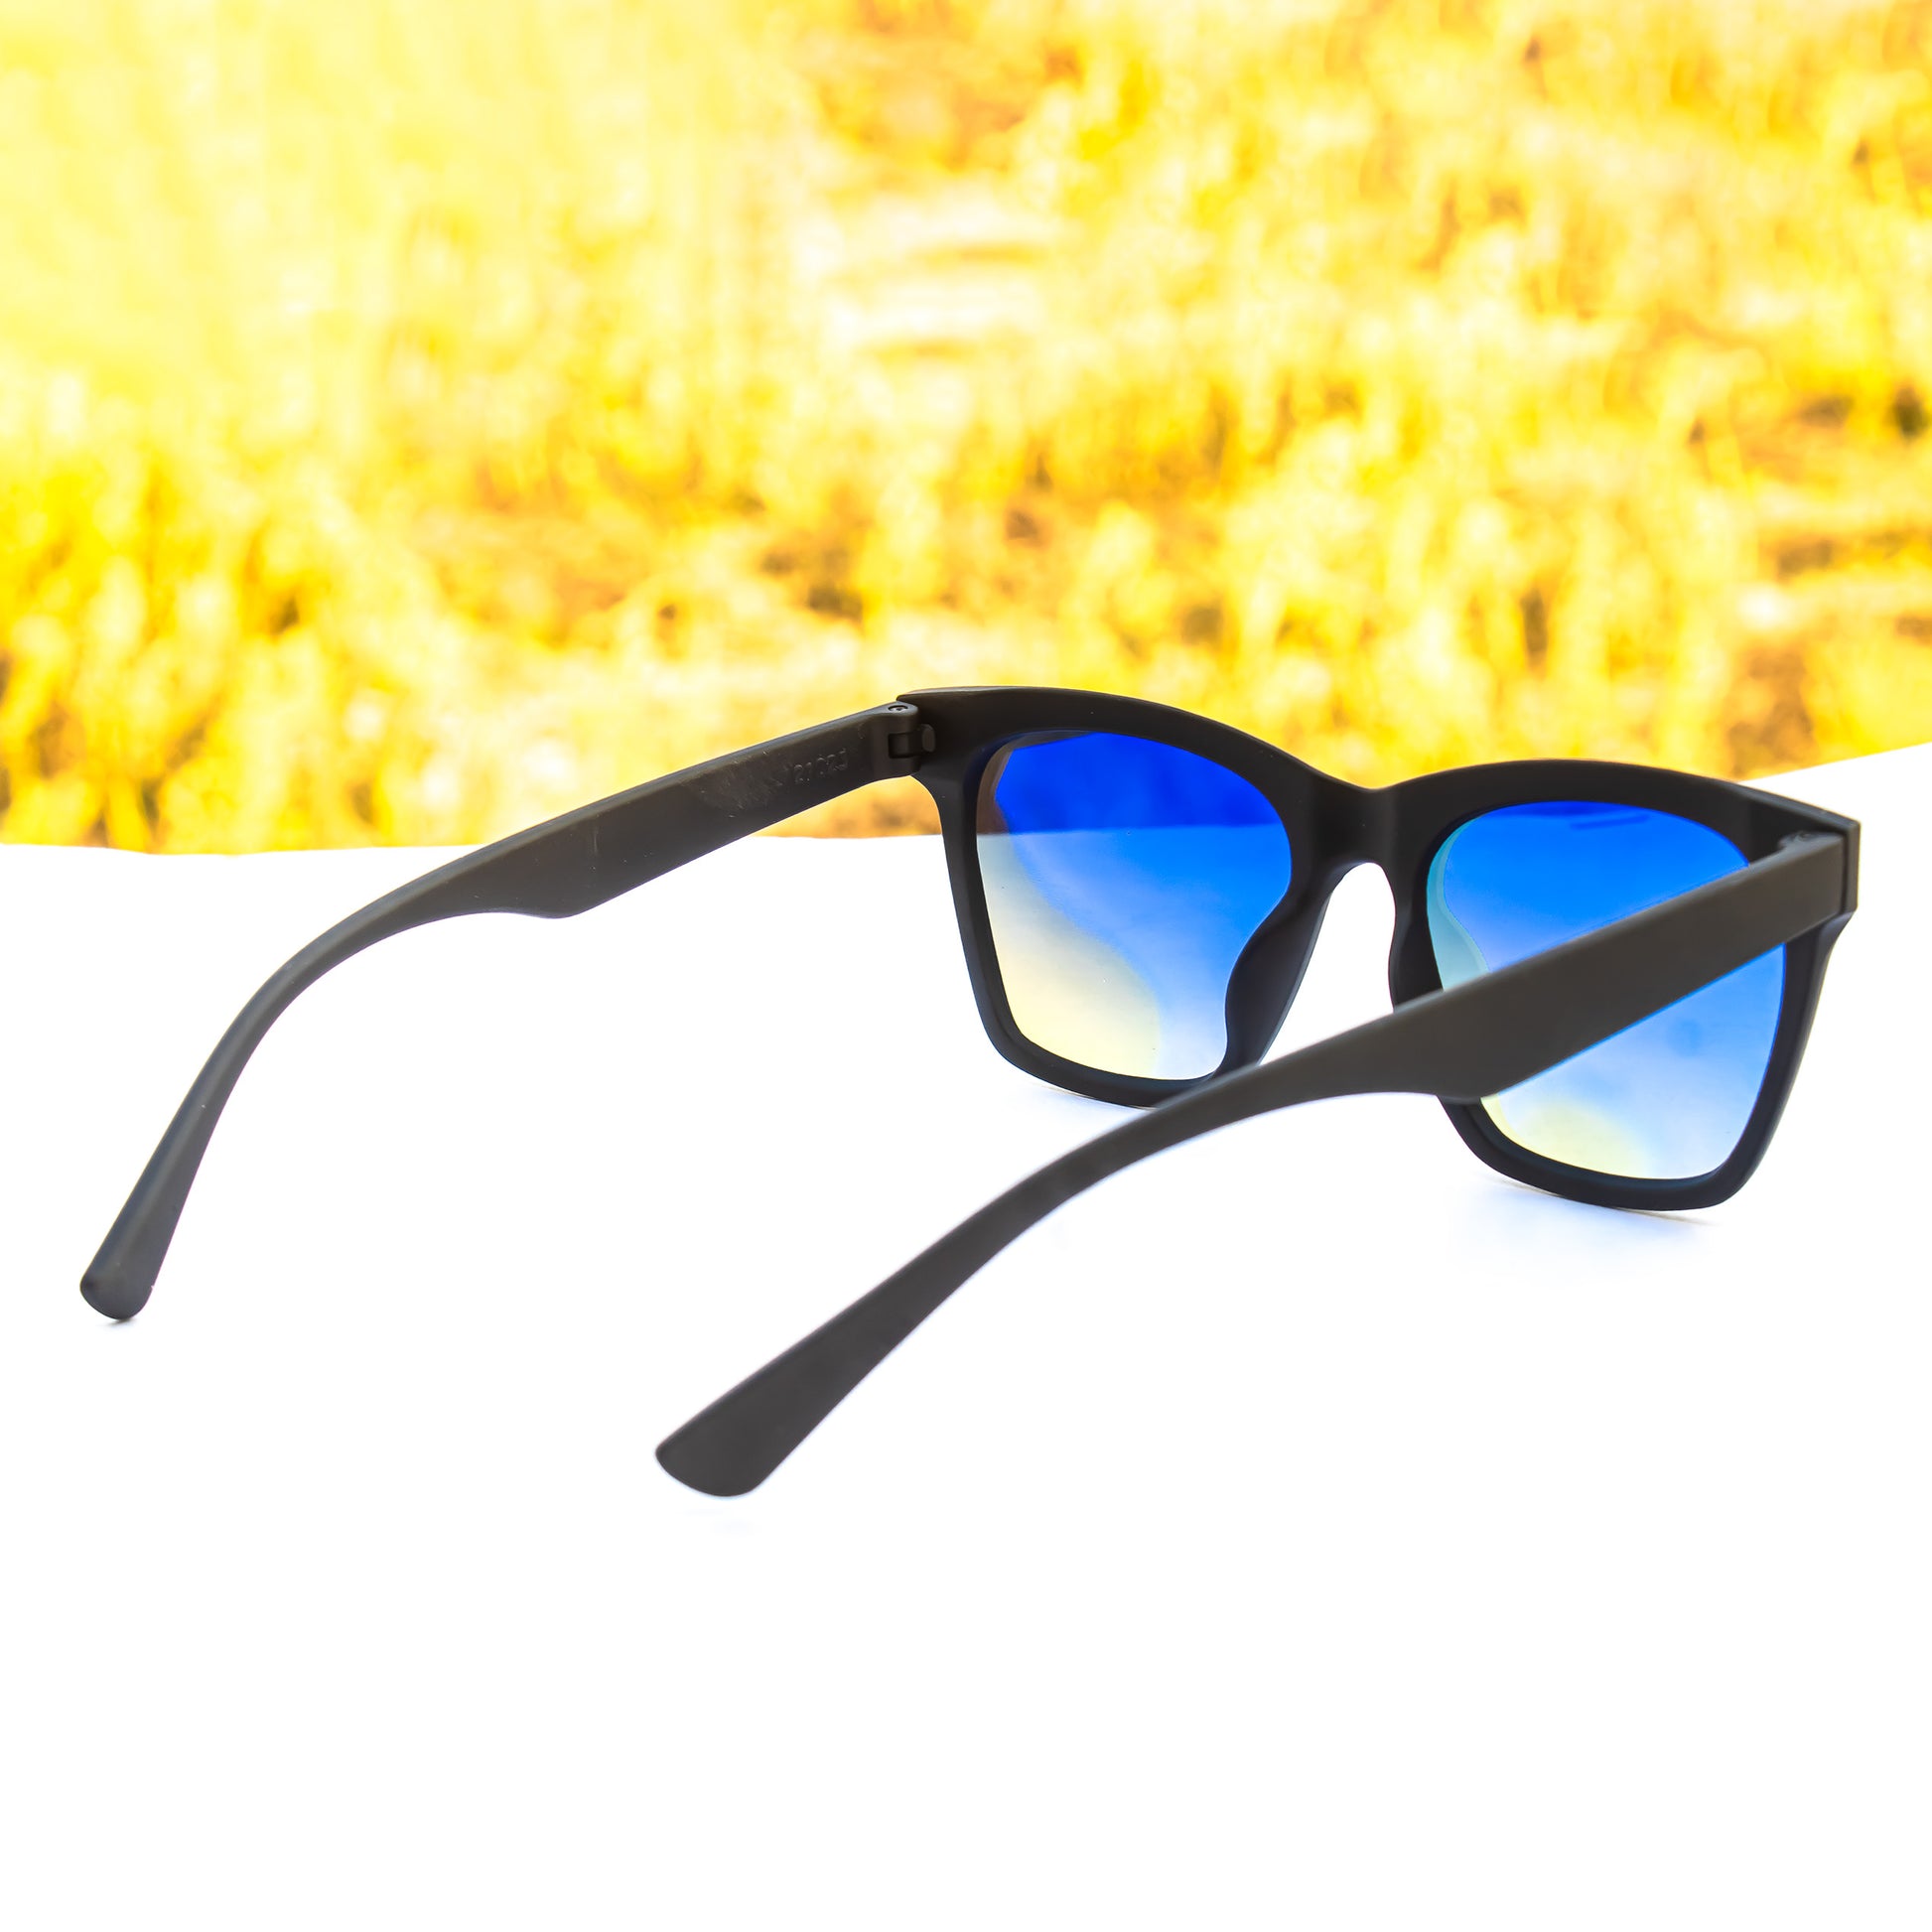  blue tinted sunglasses